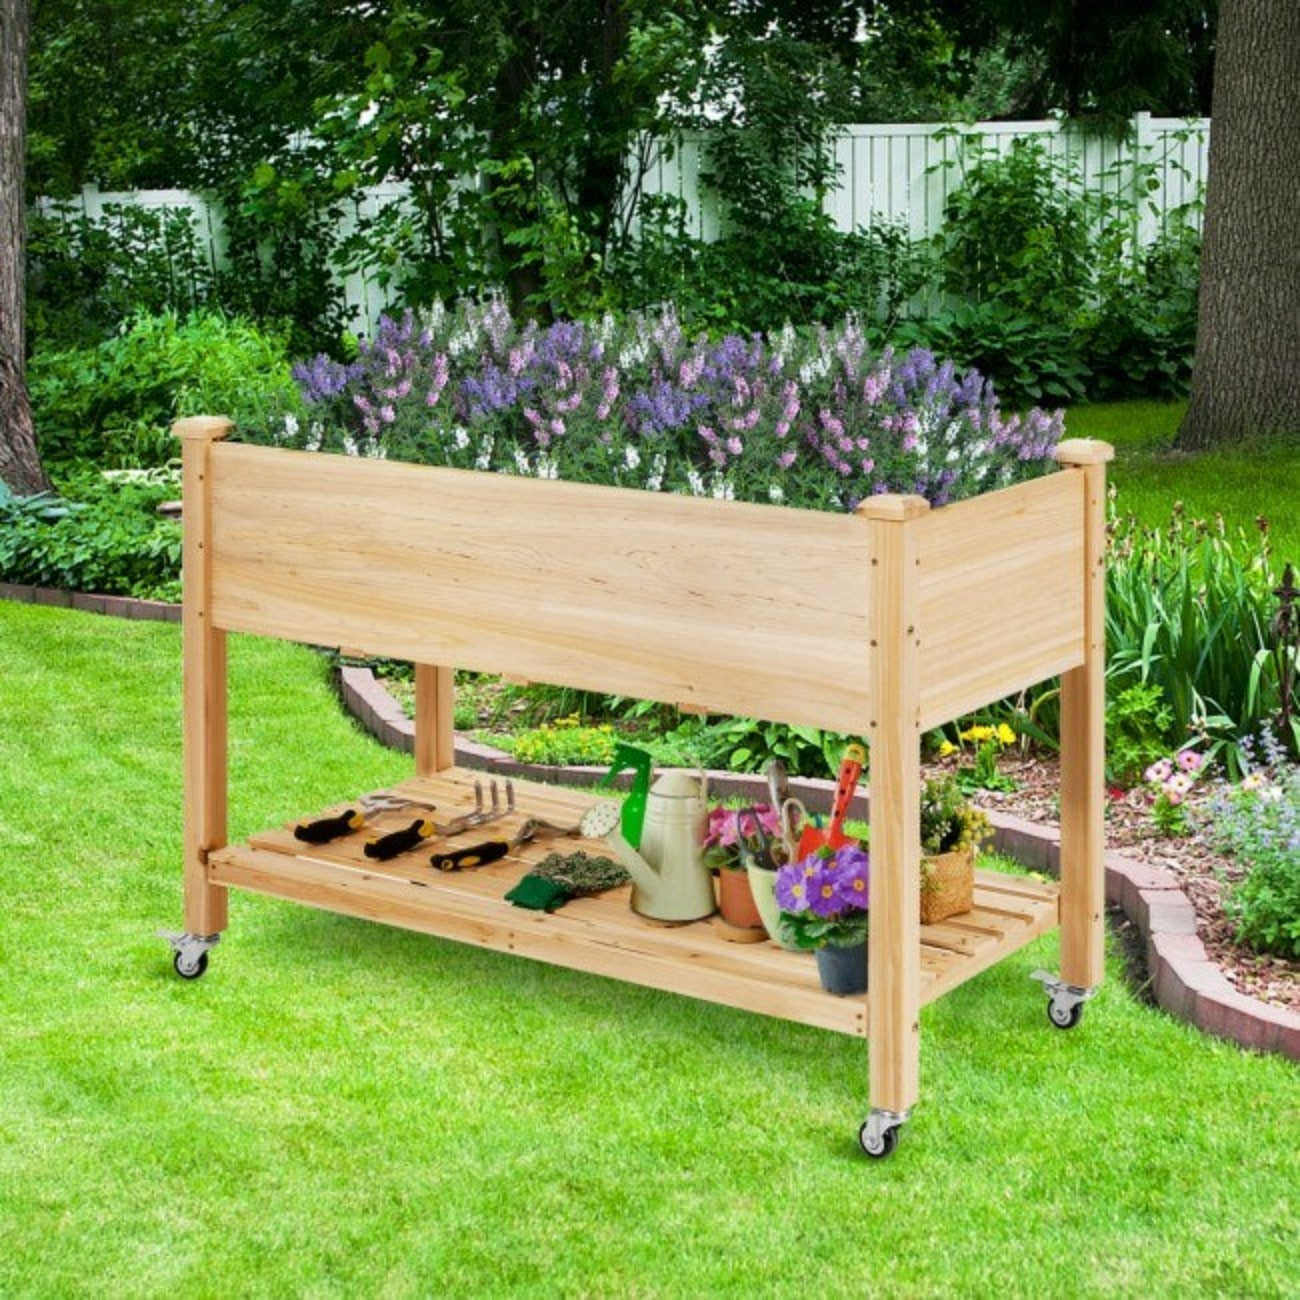 Raised Wood Planter Bed